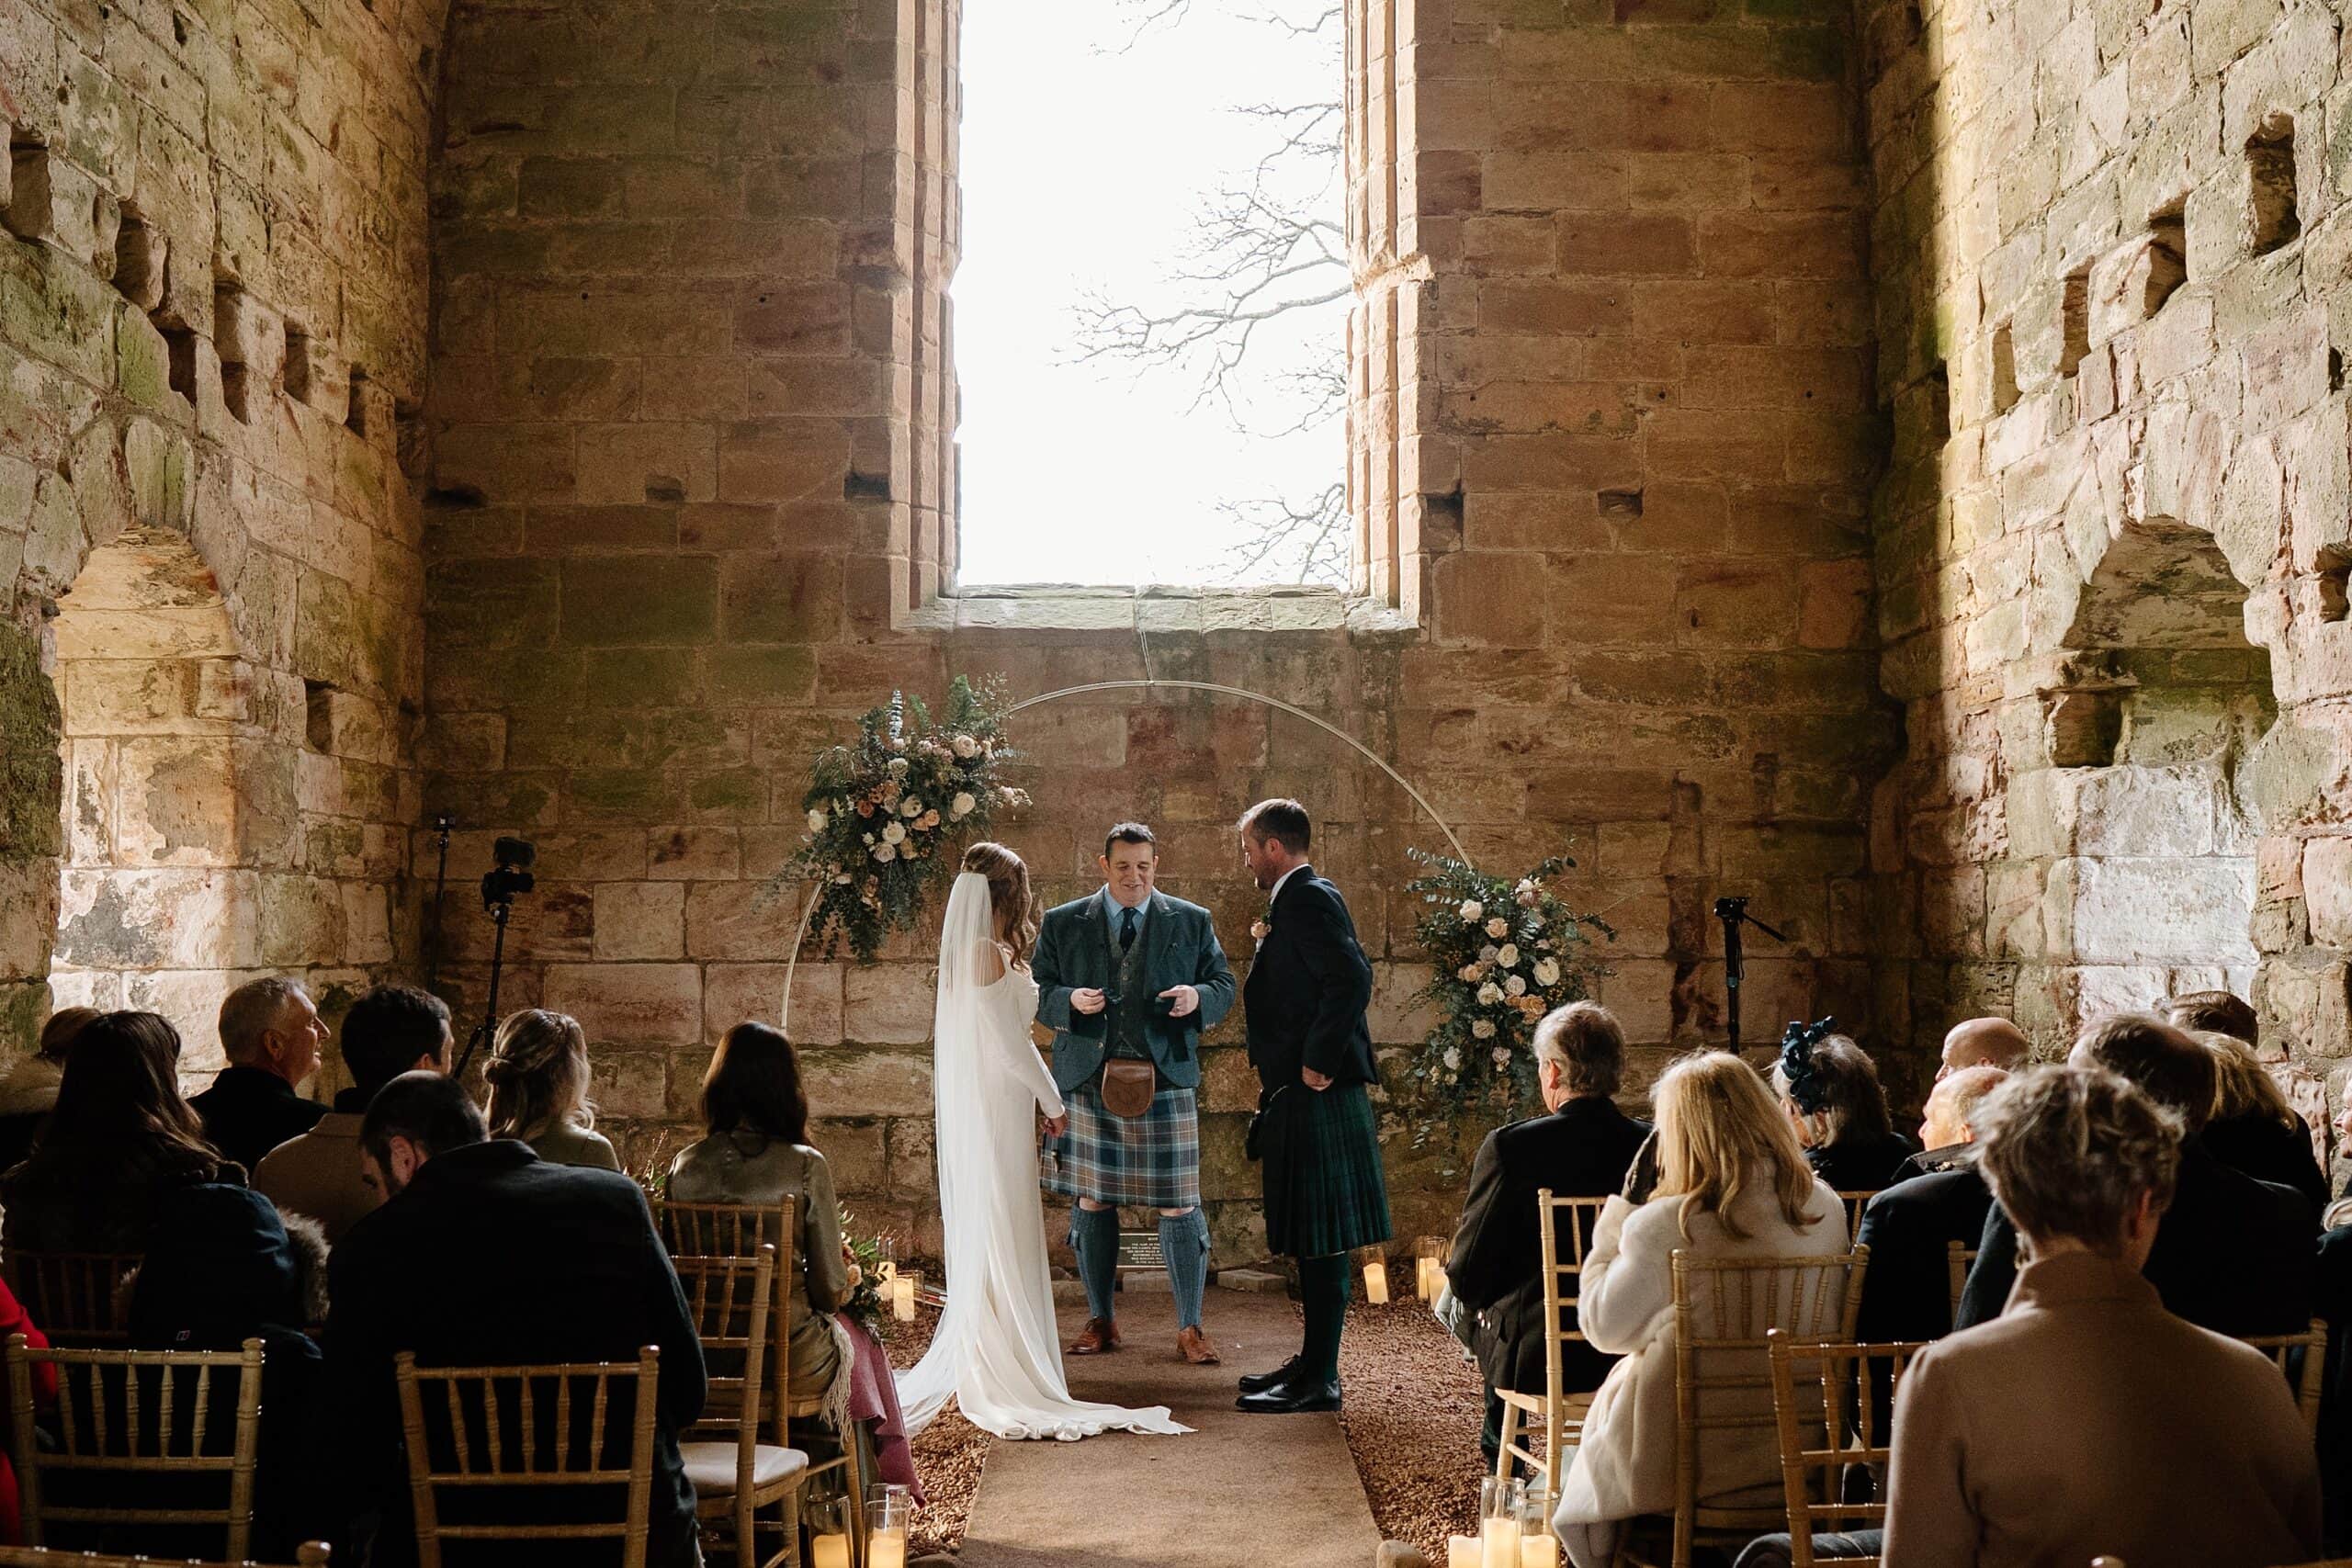 internal inside view of dunglass estate wedding photos chapel church scotland with floral arch backdrop